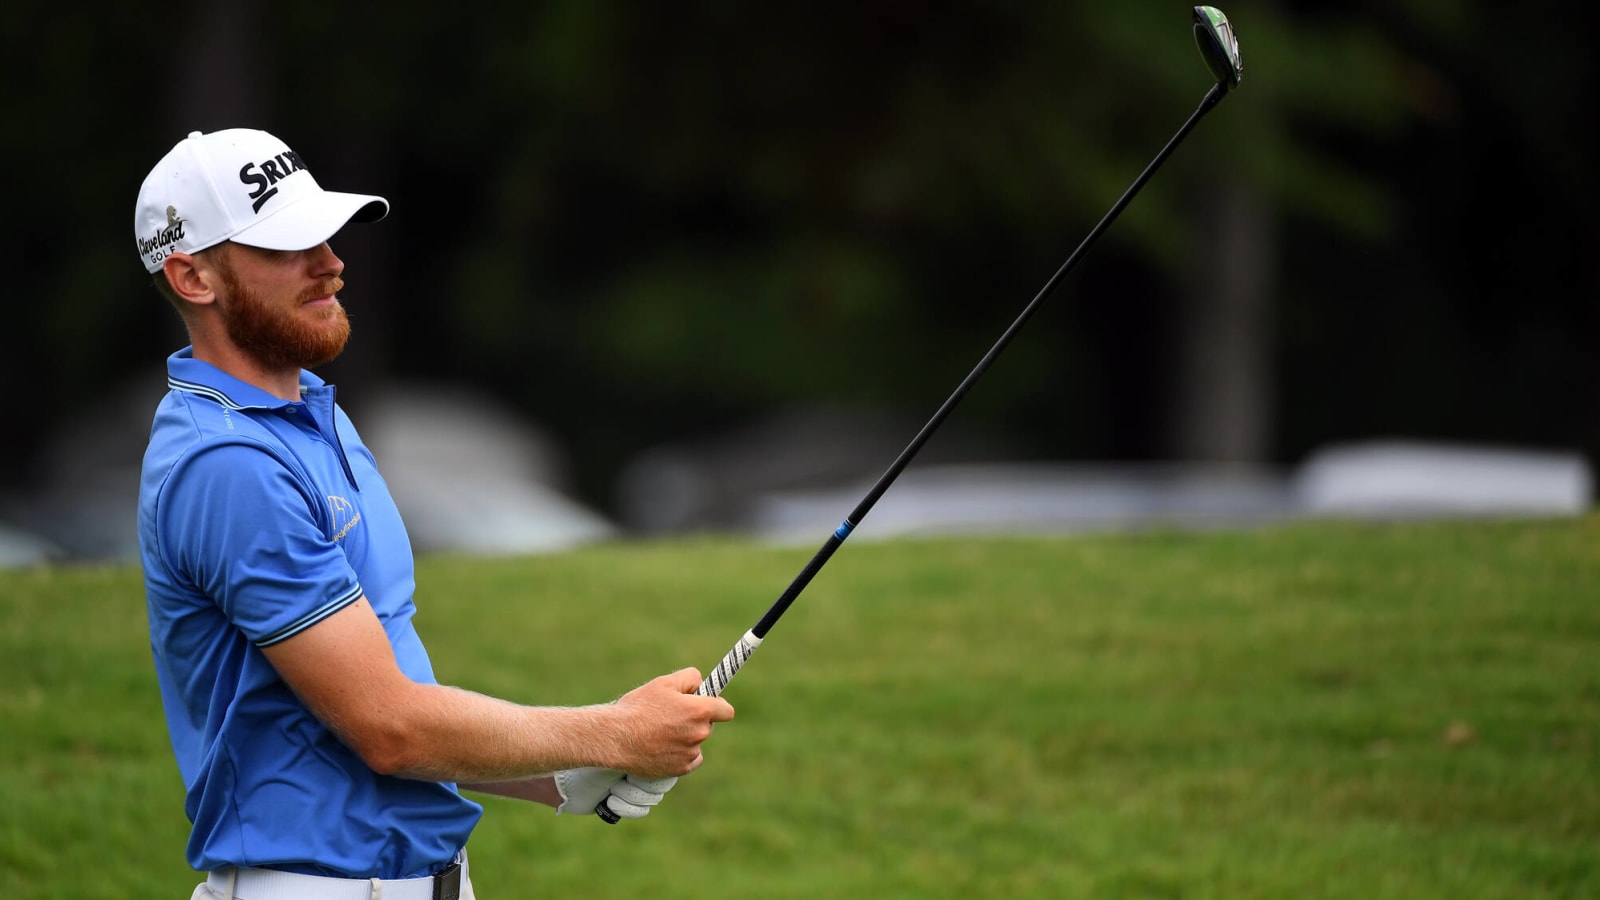 Watch: Sebastian Soderberg sinks hole-in-one at PGA Championship